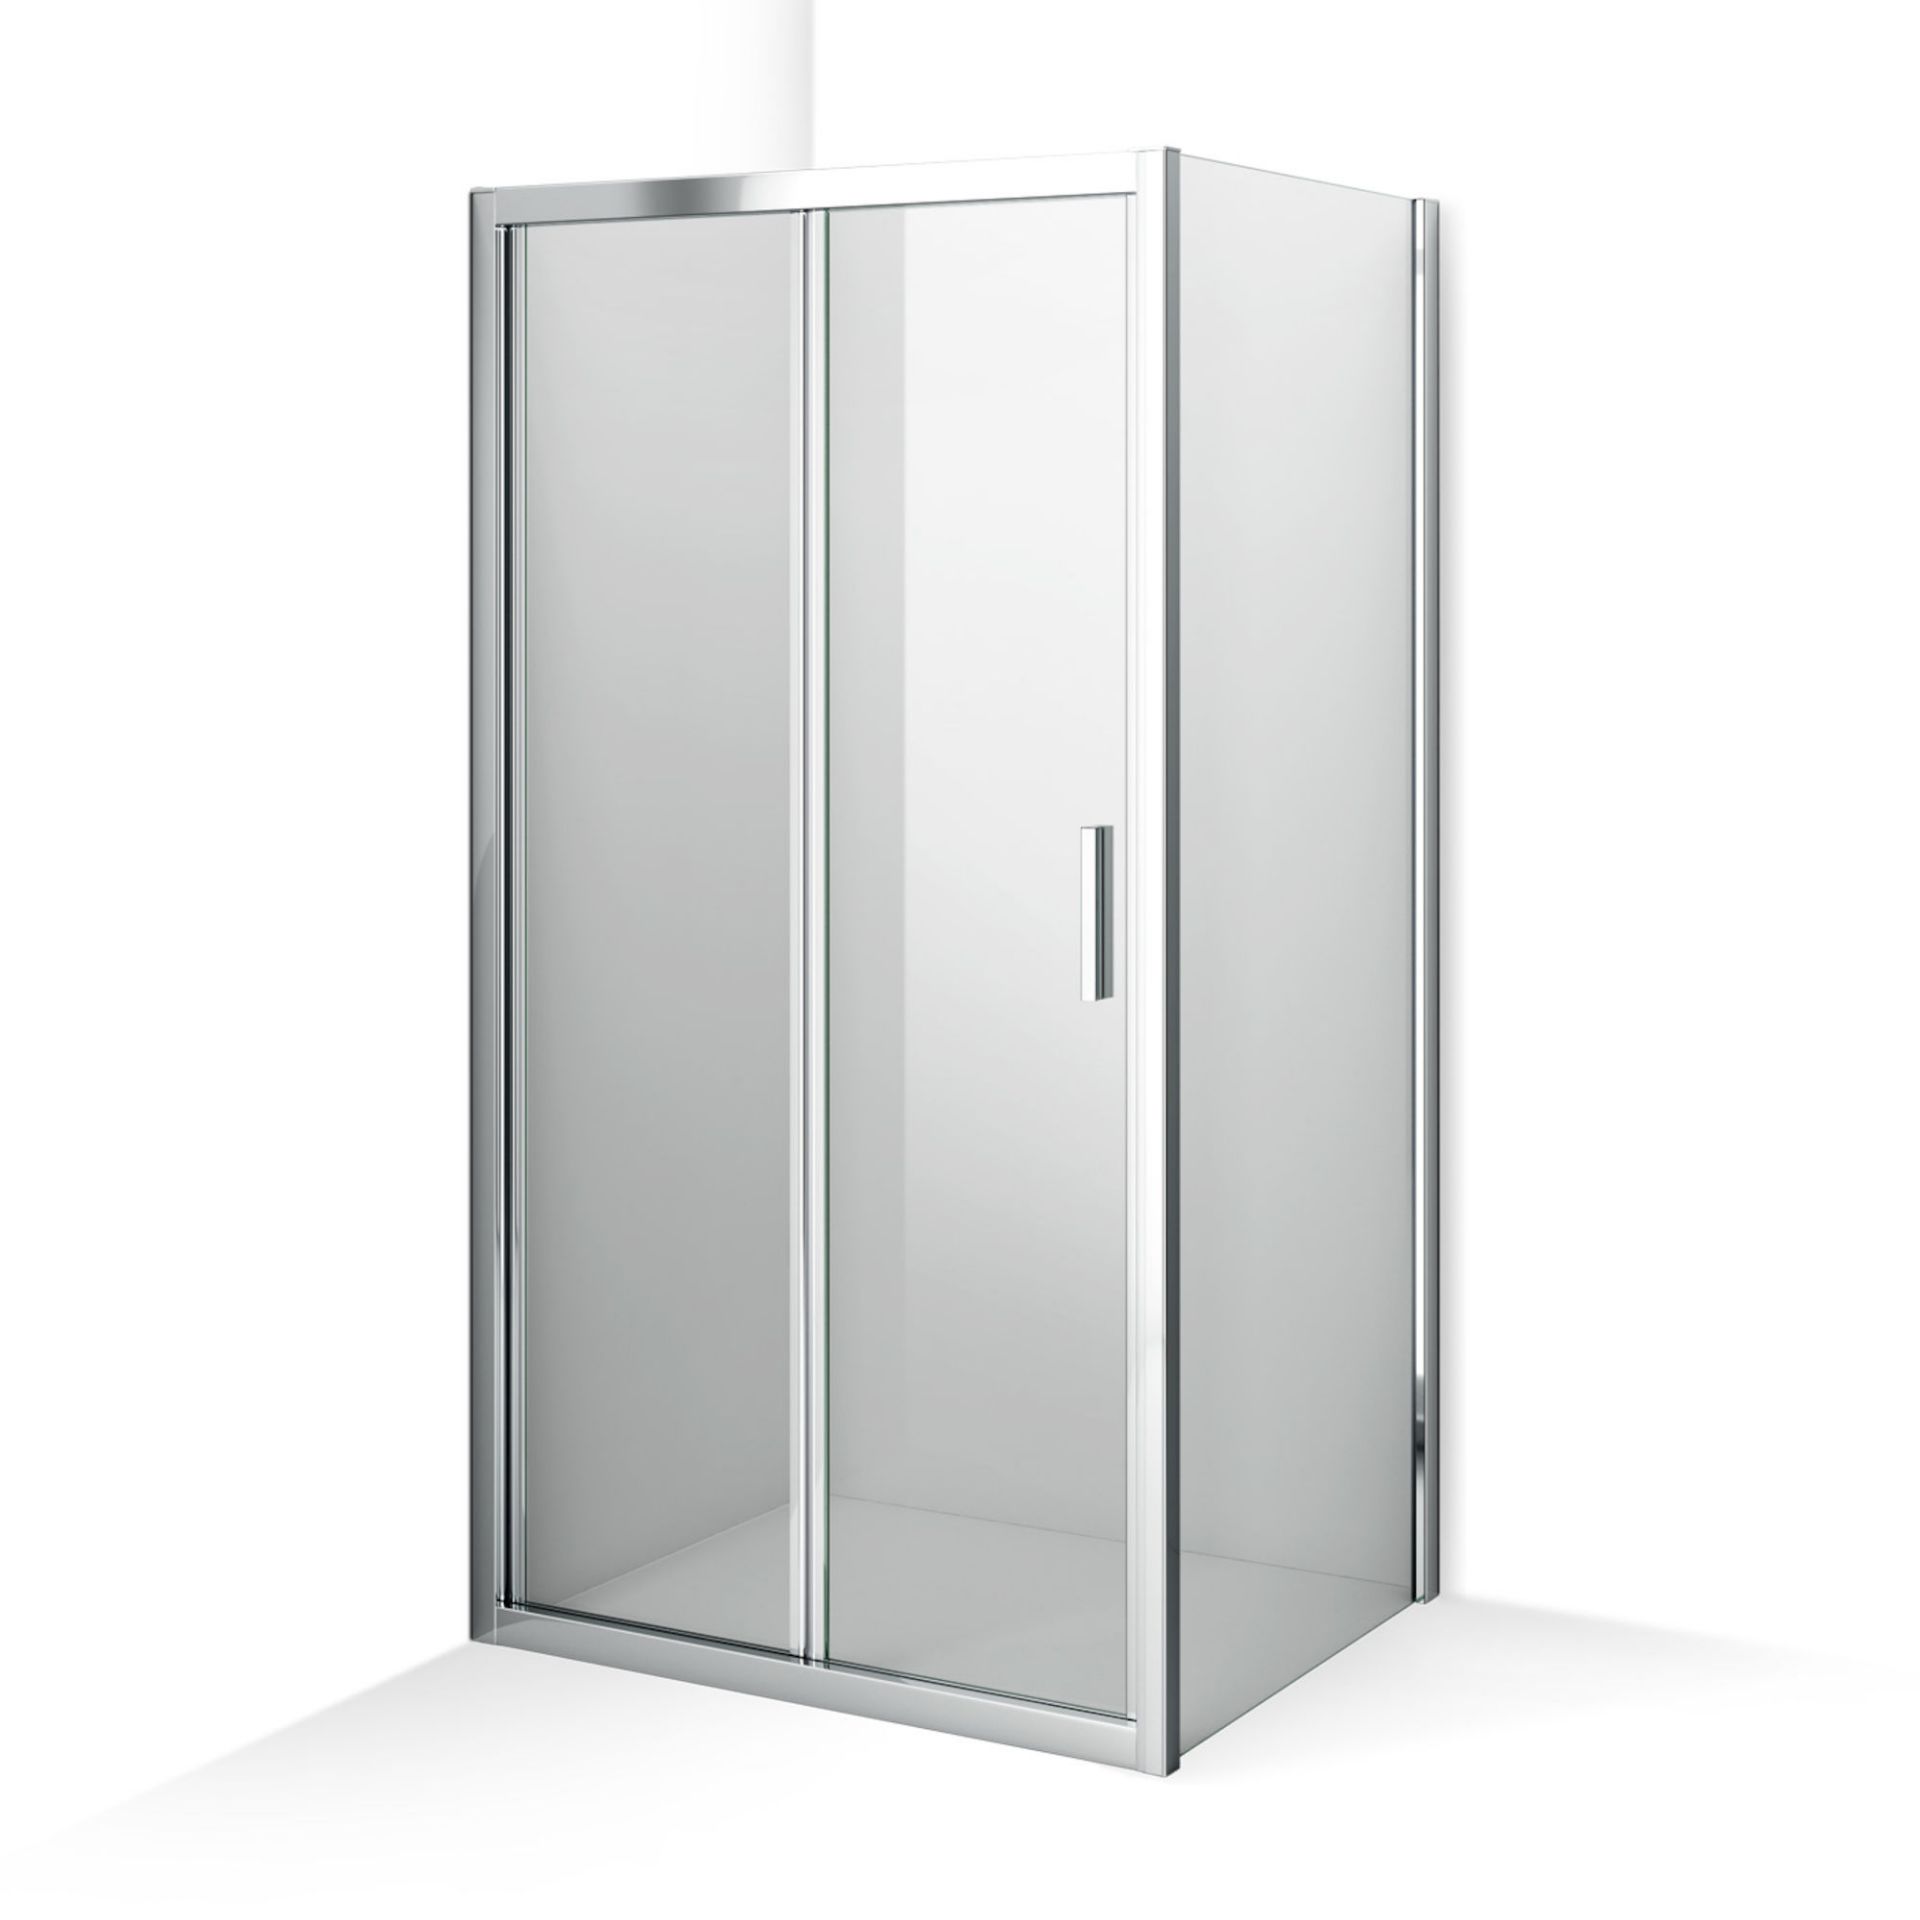 (EY133) 900x760mm - 6mm - Elements EasyClean Bi Fold Door Shower Enclosure. RRP £319.99. 6mm - Image 2 of 4